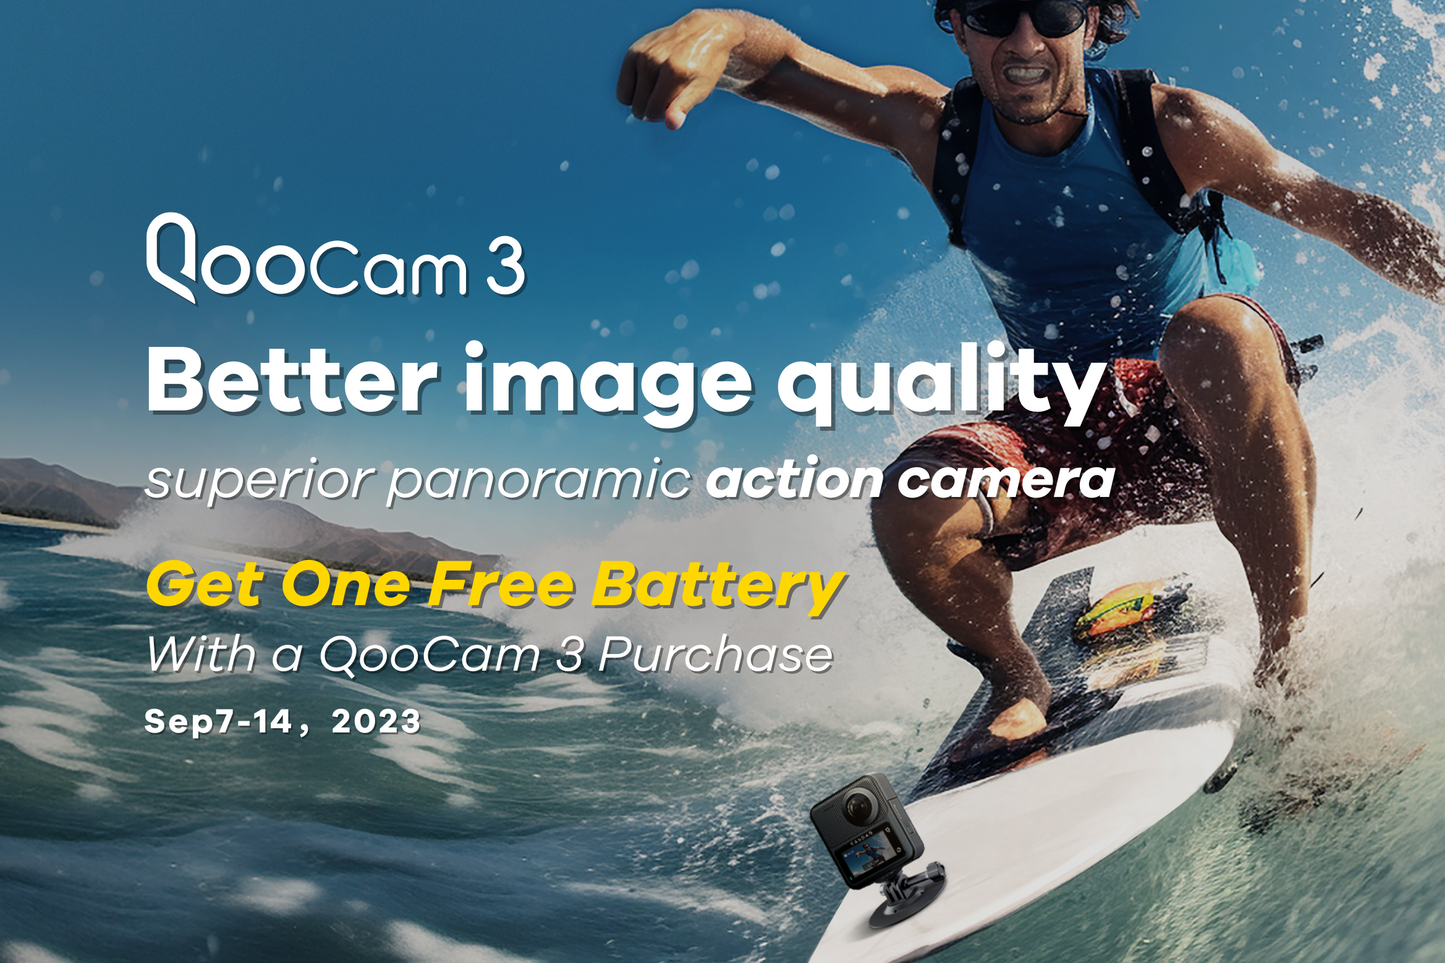 QooCam3, A 360 Action Camera with Superior Image Quality